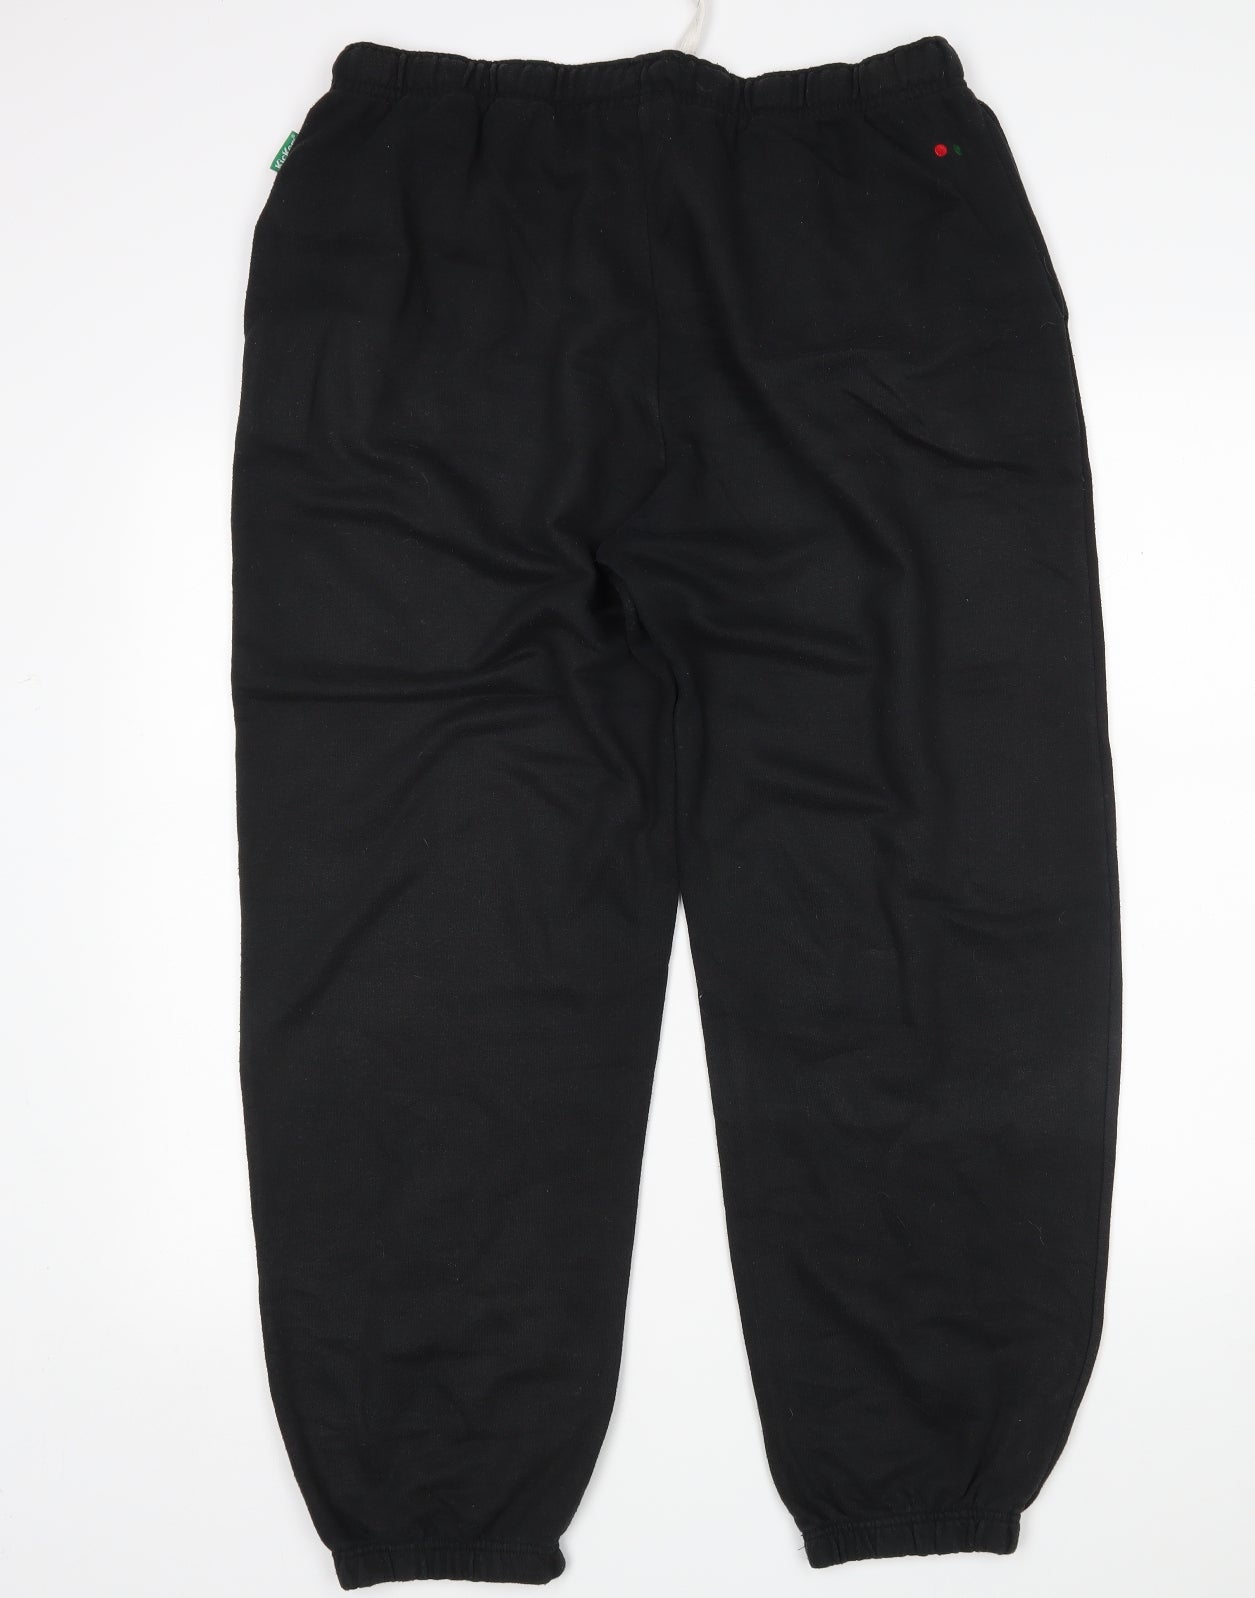 Kickers Mens Black  Cotton Sweatpants Trousers Size M L28 in Regular